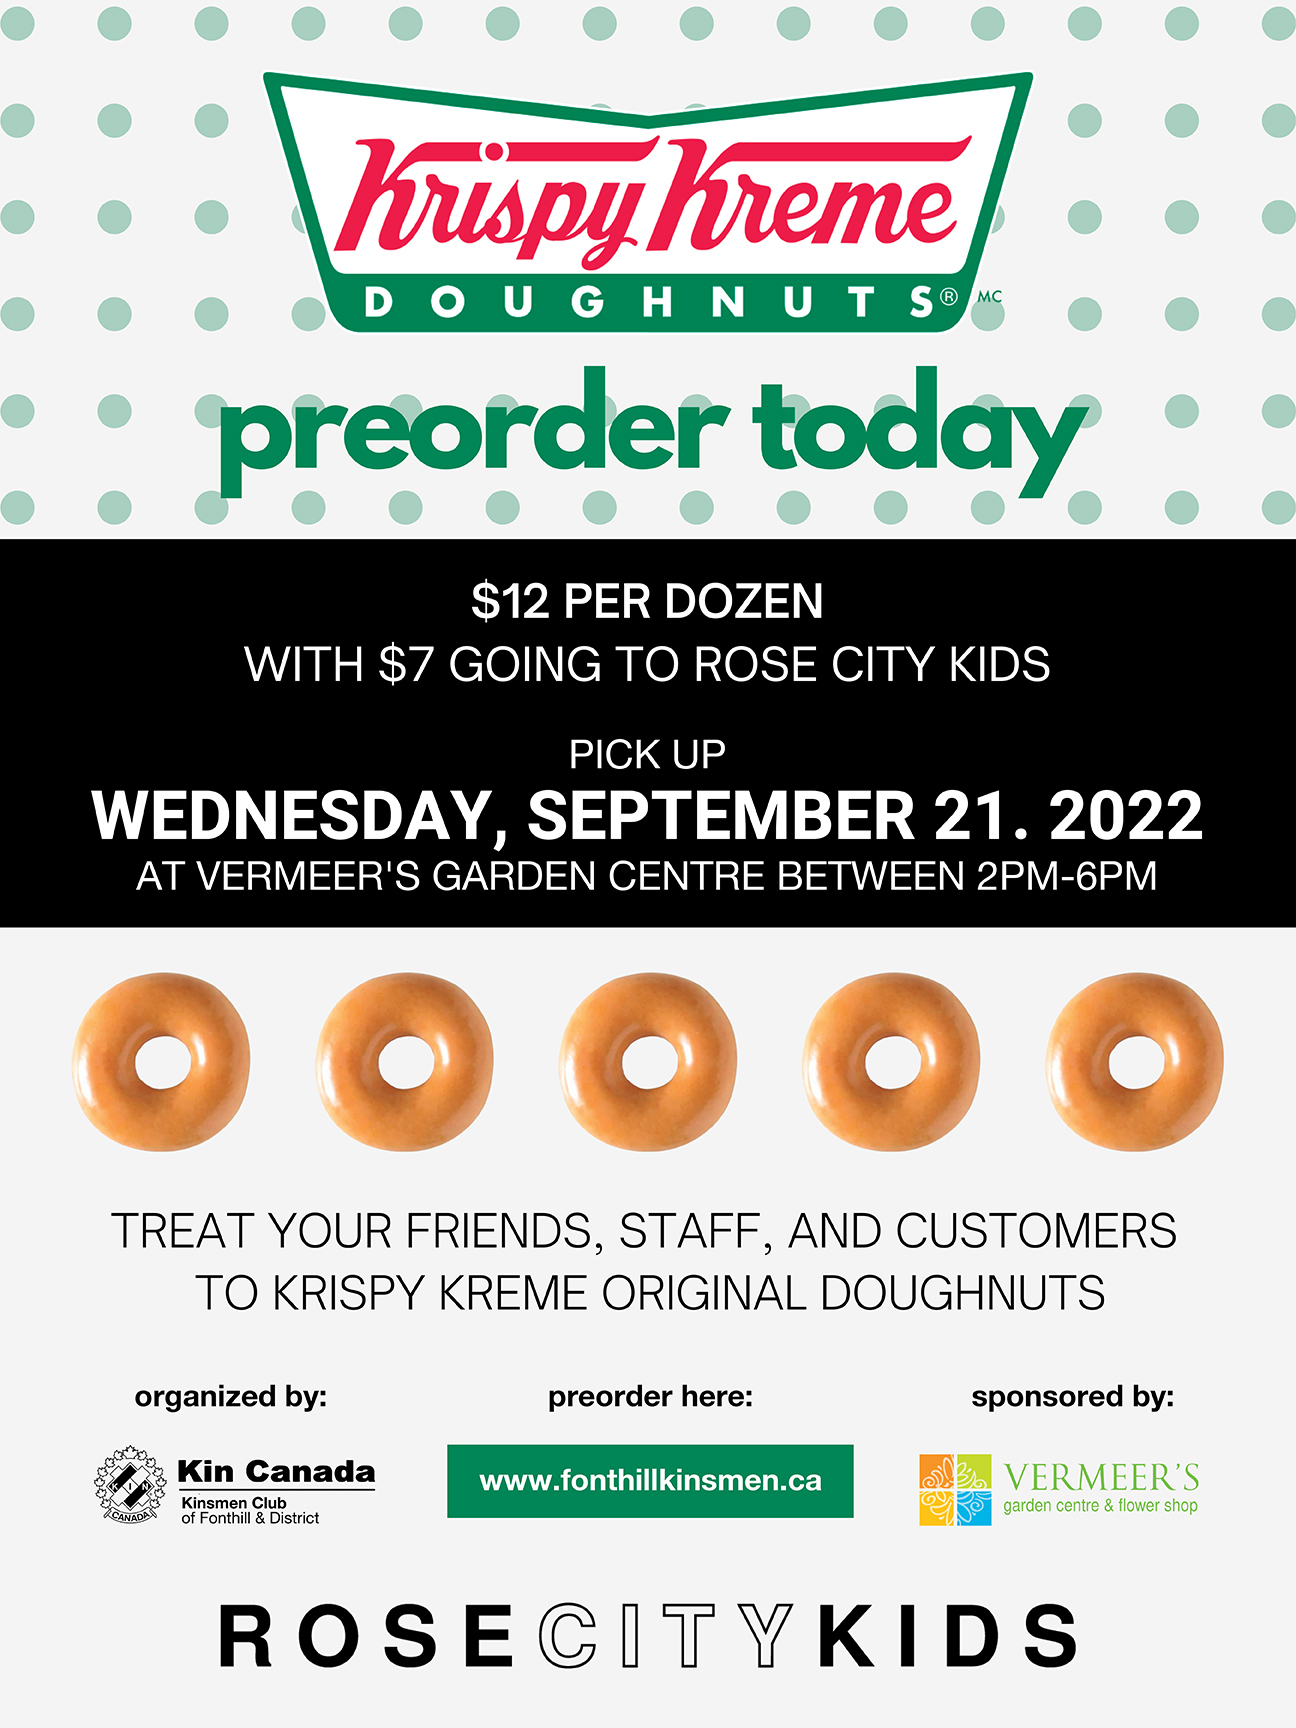 Krispy Kreme Promotion for Rose City Kids